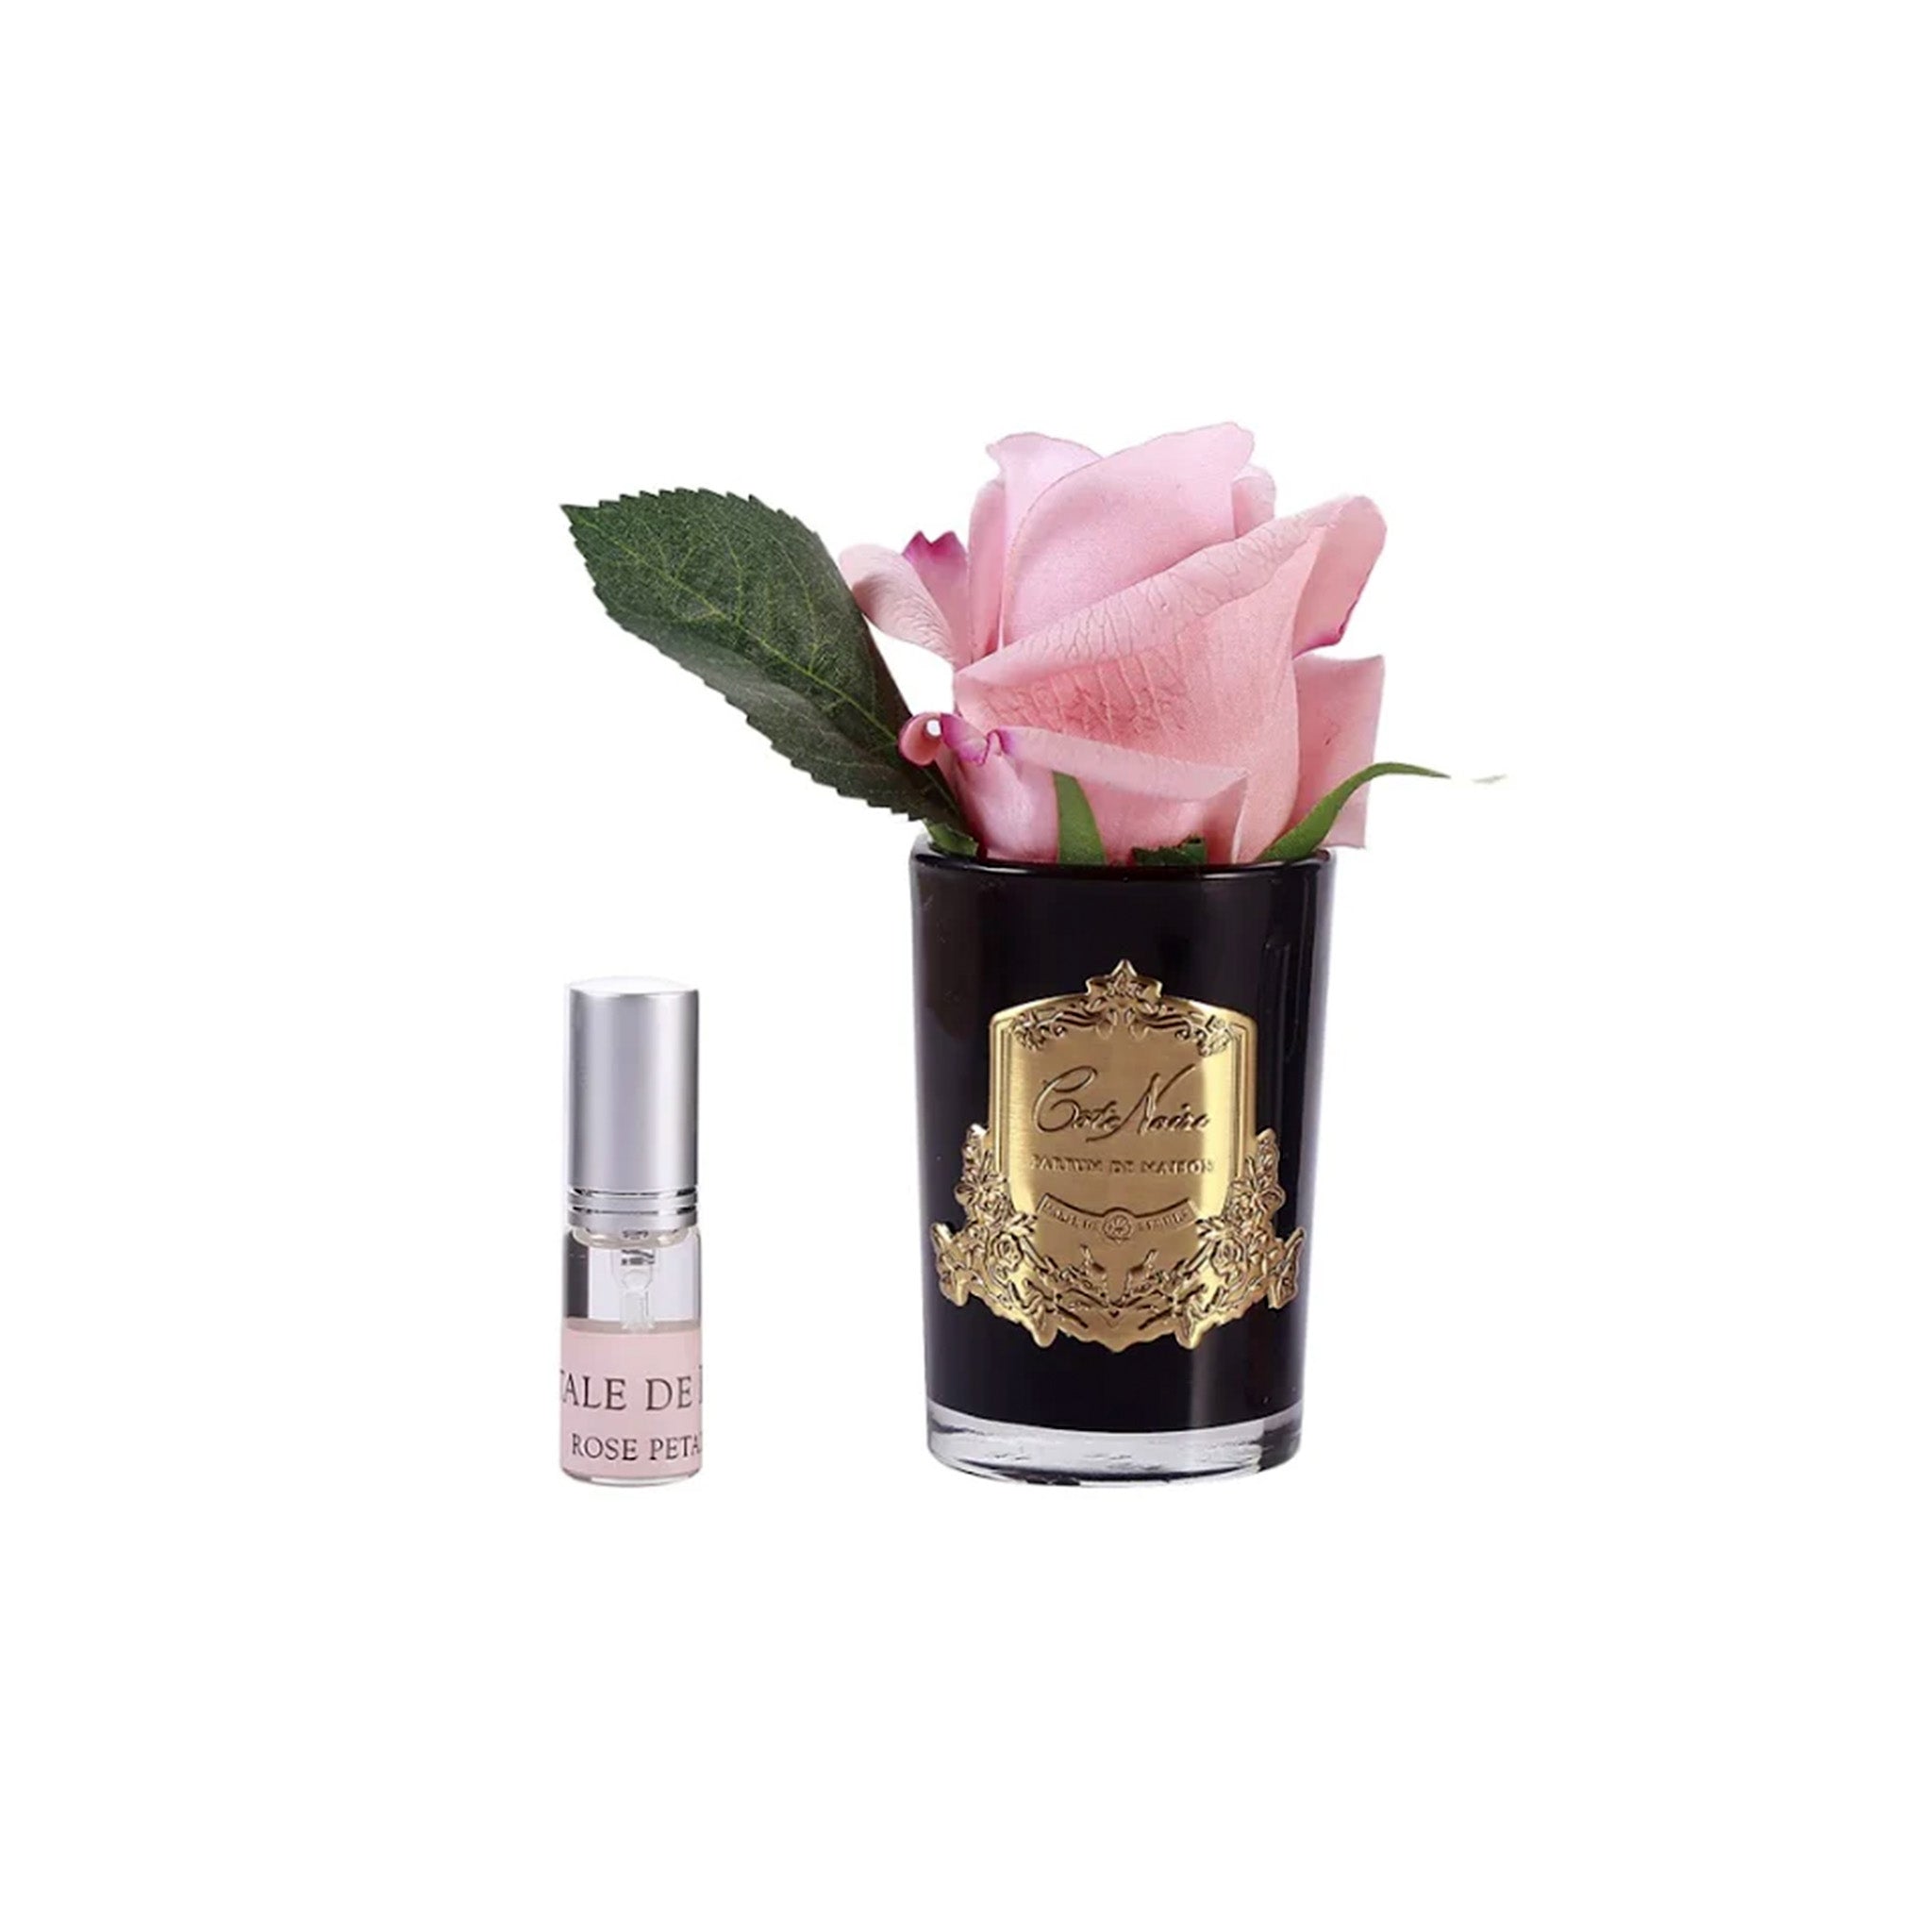 a bottle of fragrance next to a pink rose in a black vase